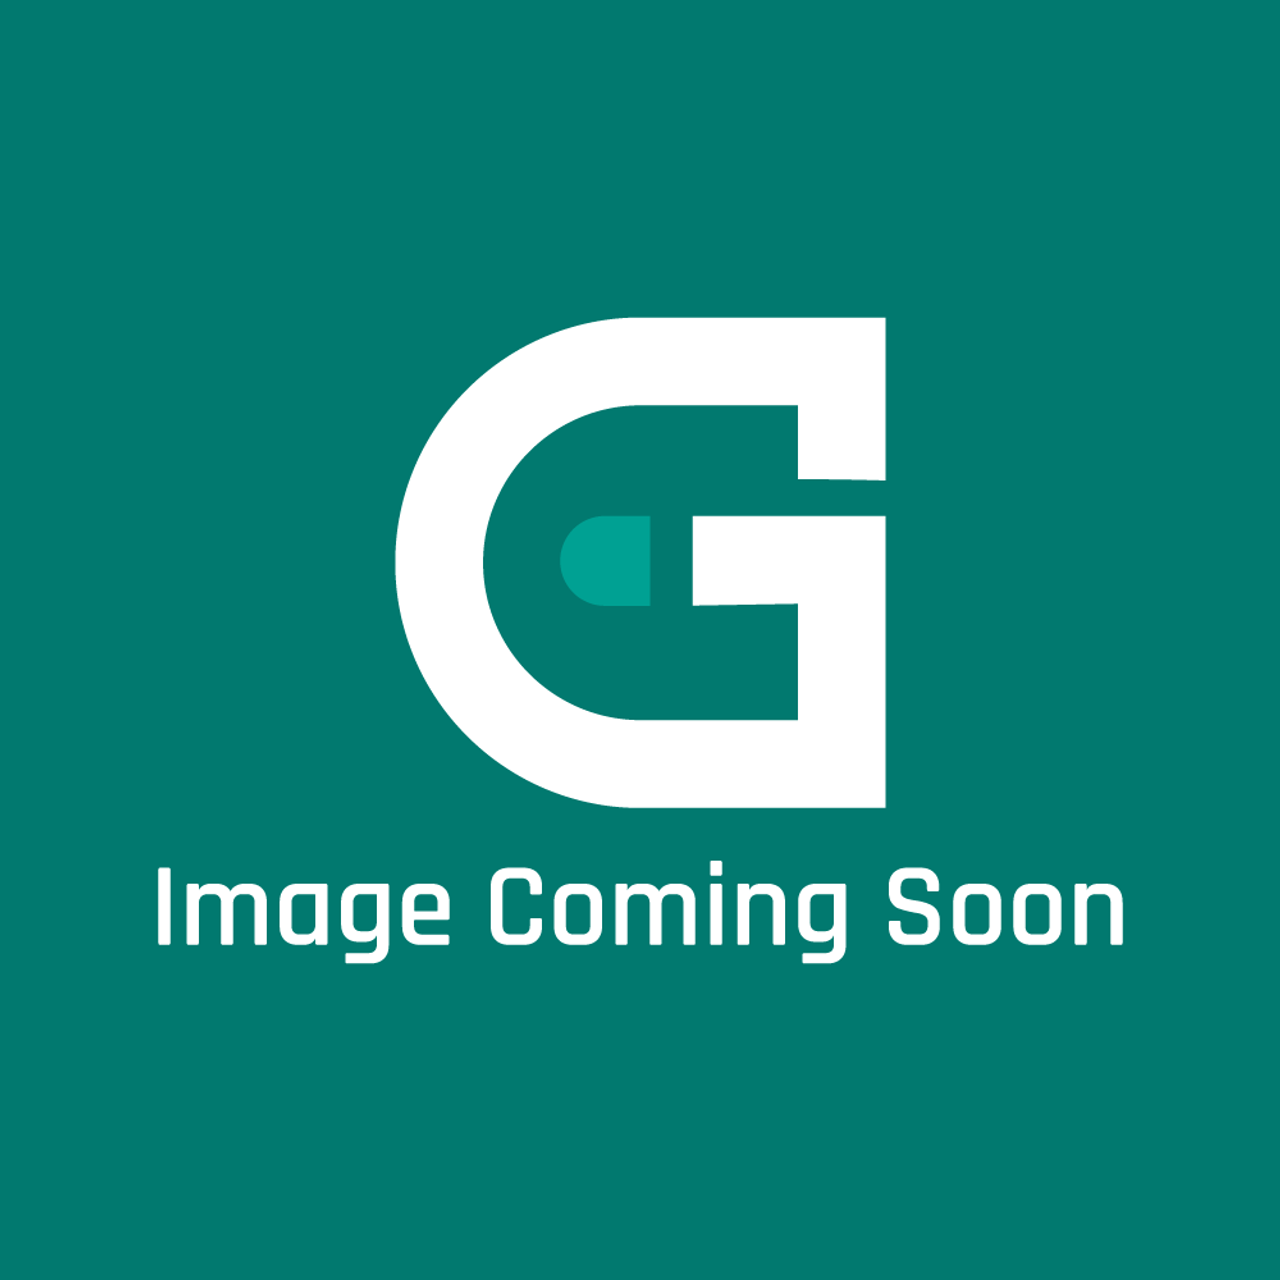 Frigidaire - Electrolux 5304501063 Bulkhead - Image Coming Soon!